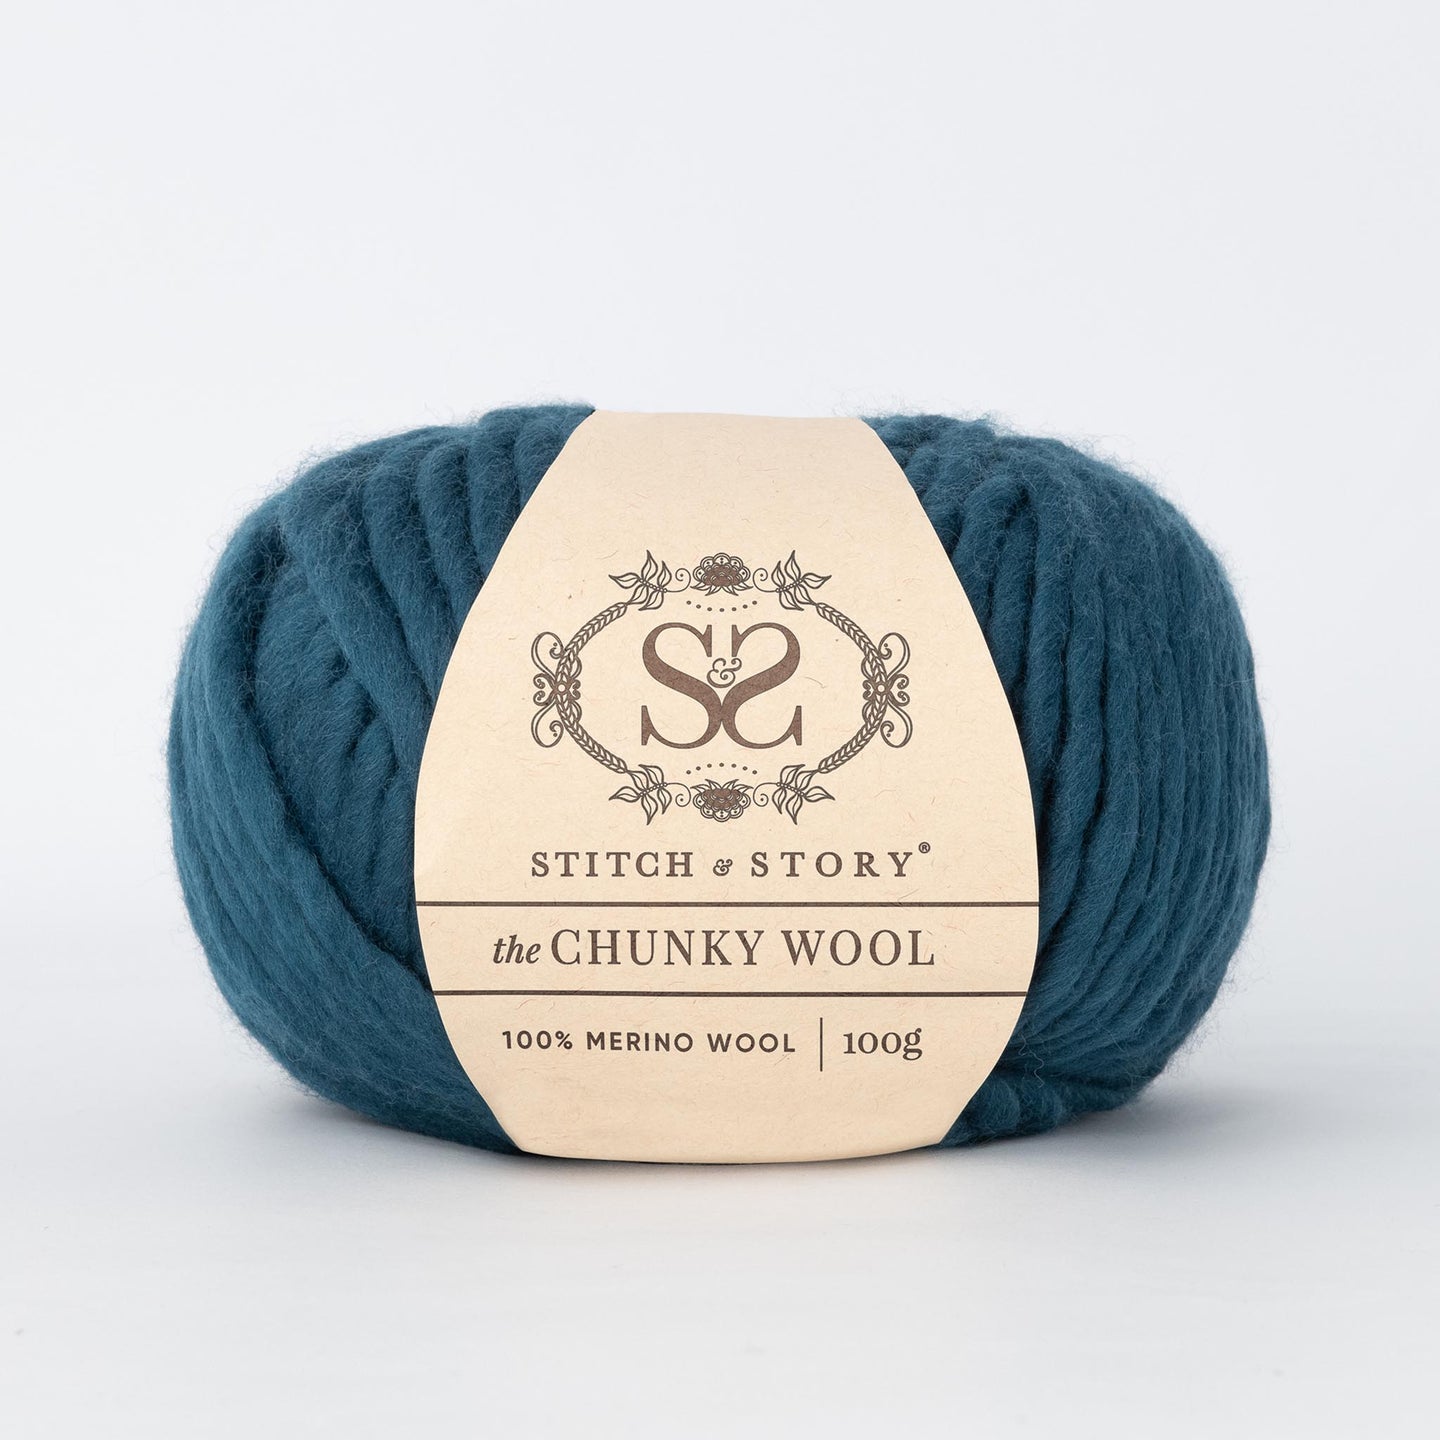 The Chunky Wool Knitting Yarn